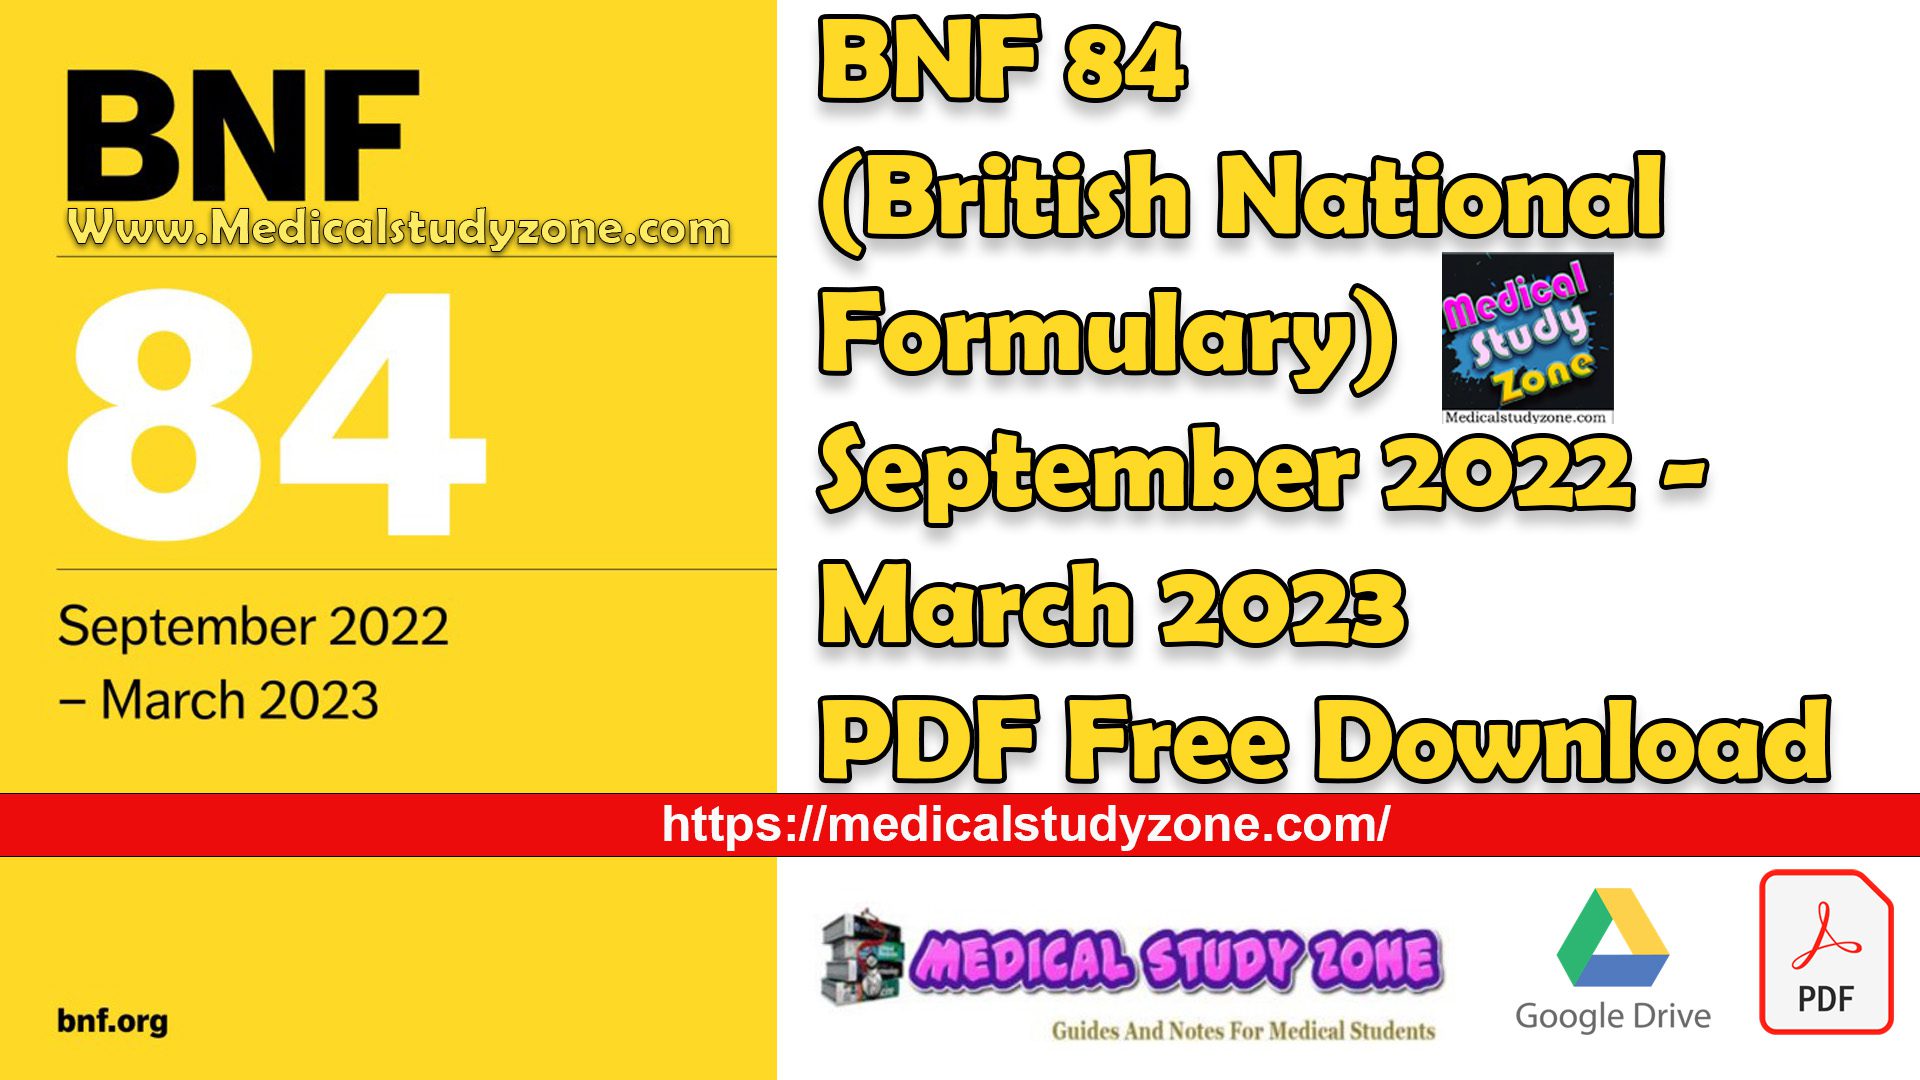 BNF 84 (British National Formulary) September 2022 March 2023 PDF